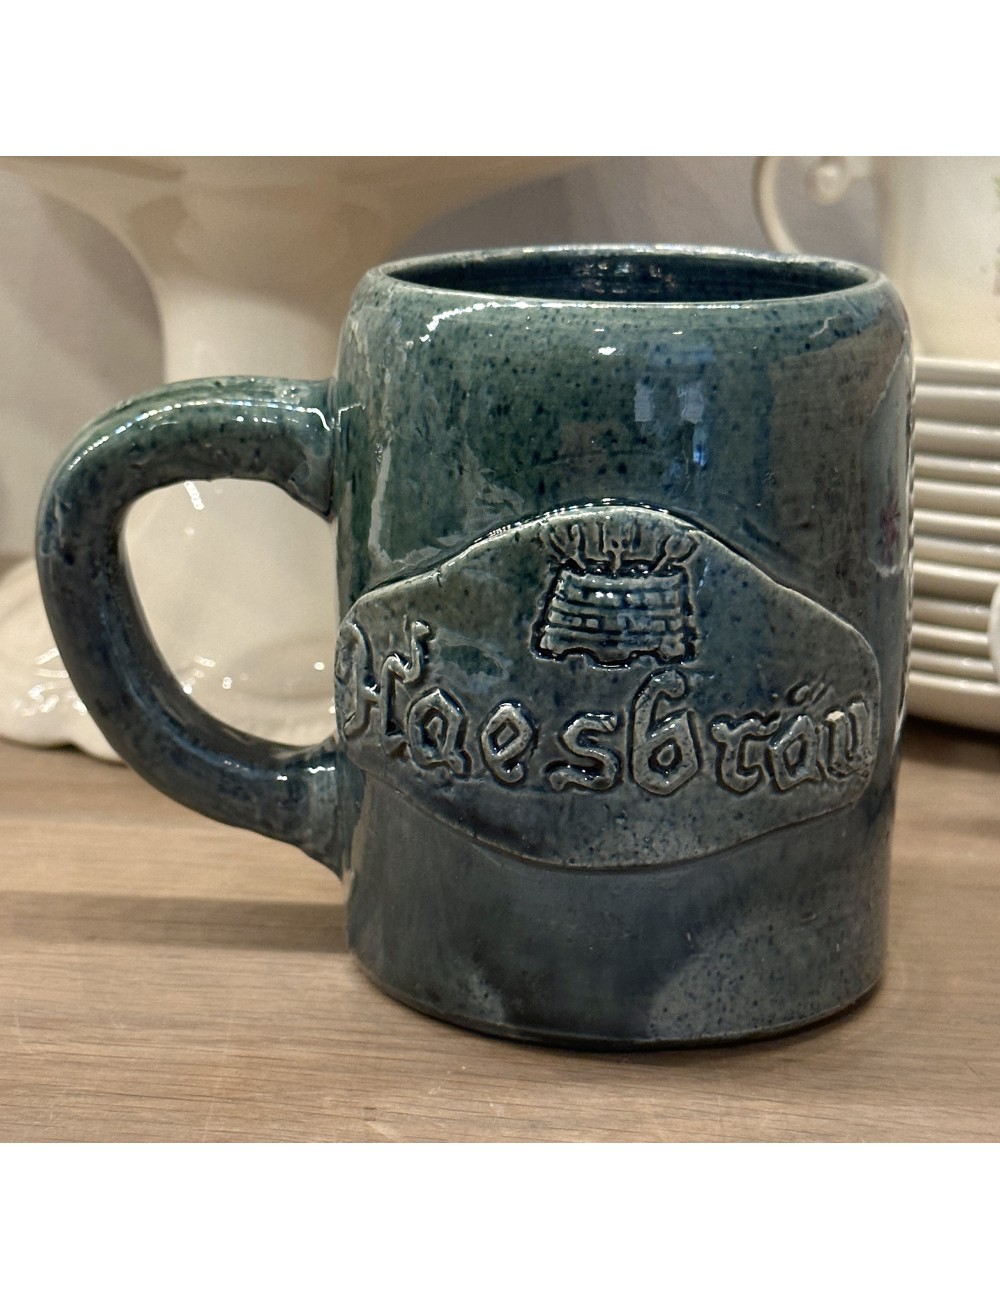 Beer mug - handmade by A. Noseda of Kuurne - marked inside bottom - dark green model